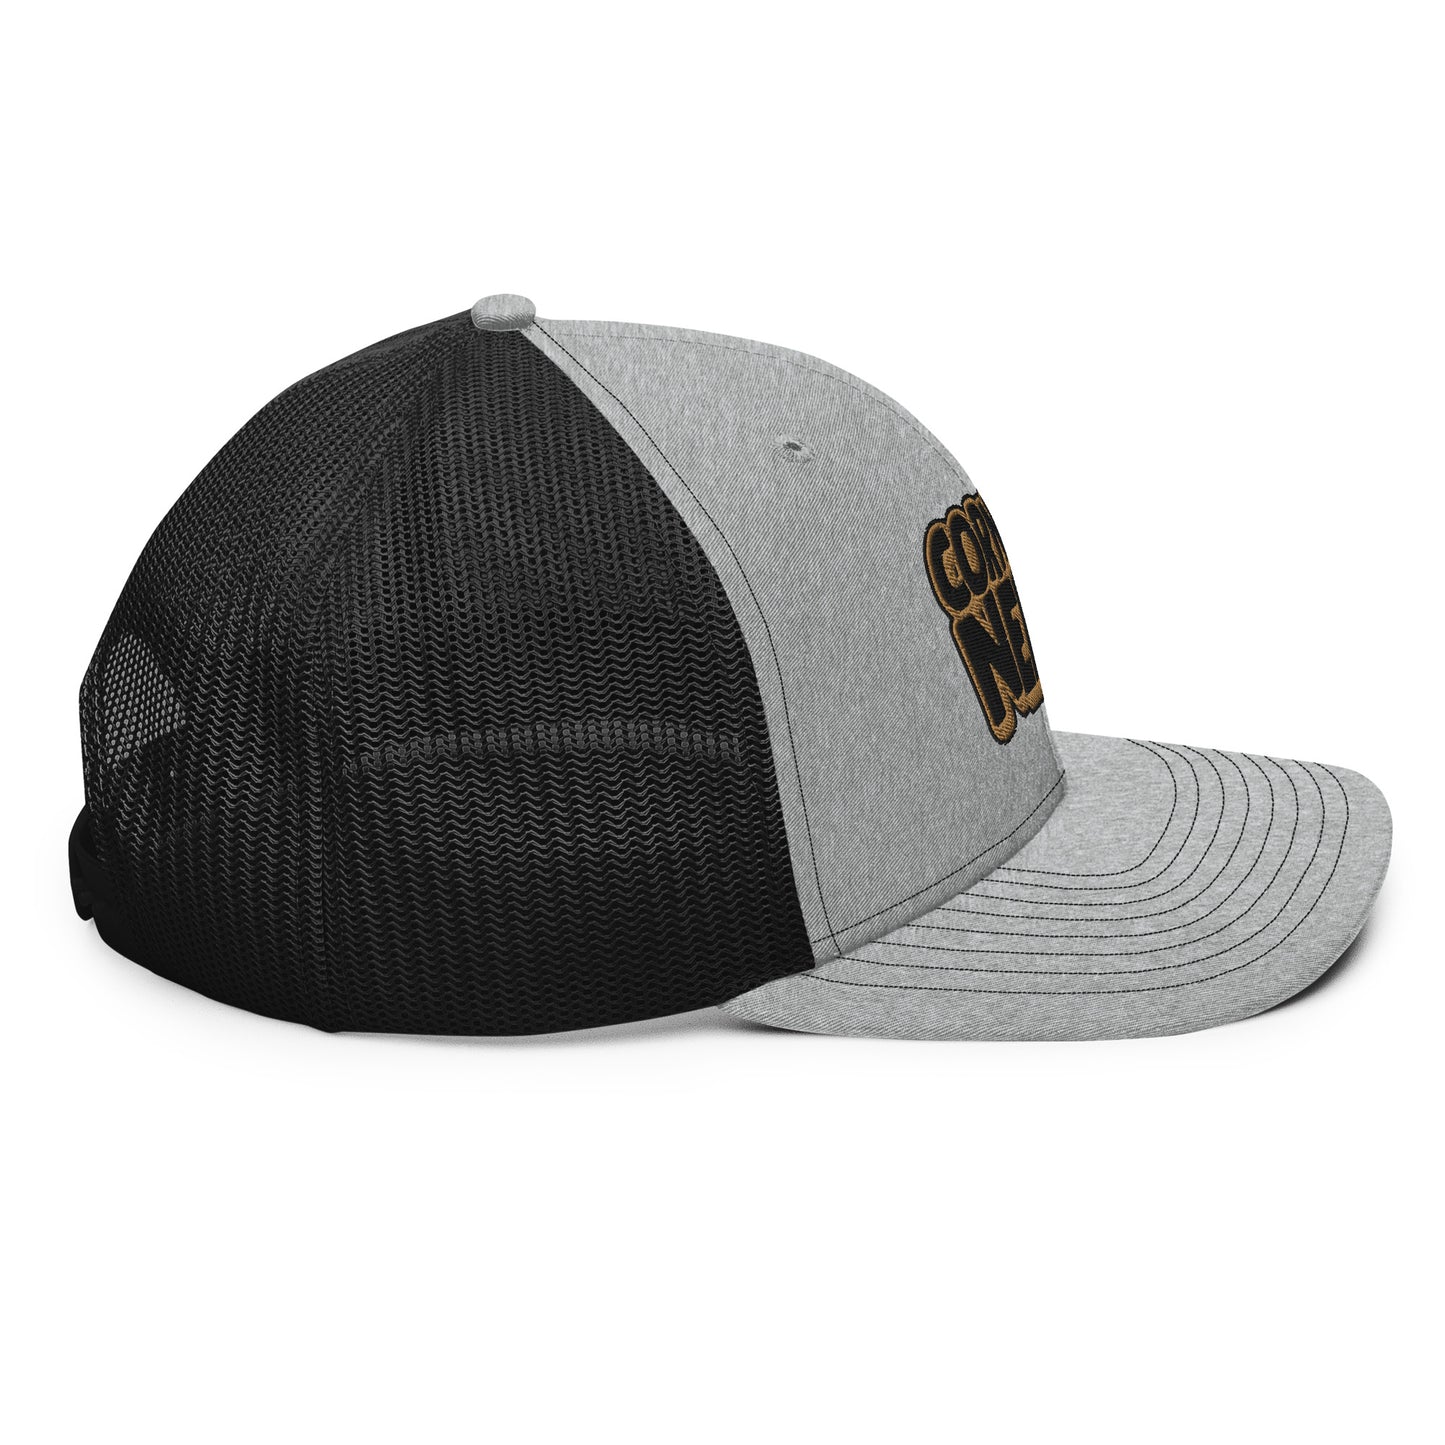 black/gold nerds logo Richardson 112 snapback Trucker hat